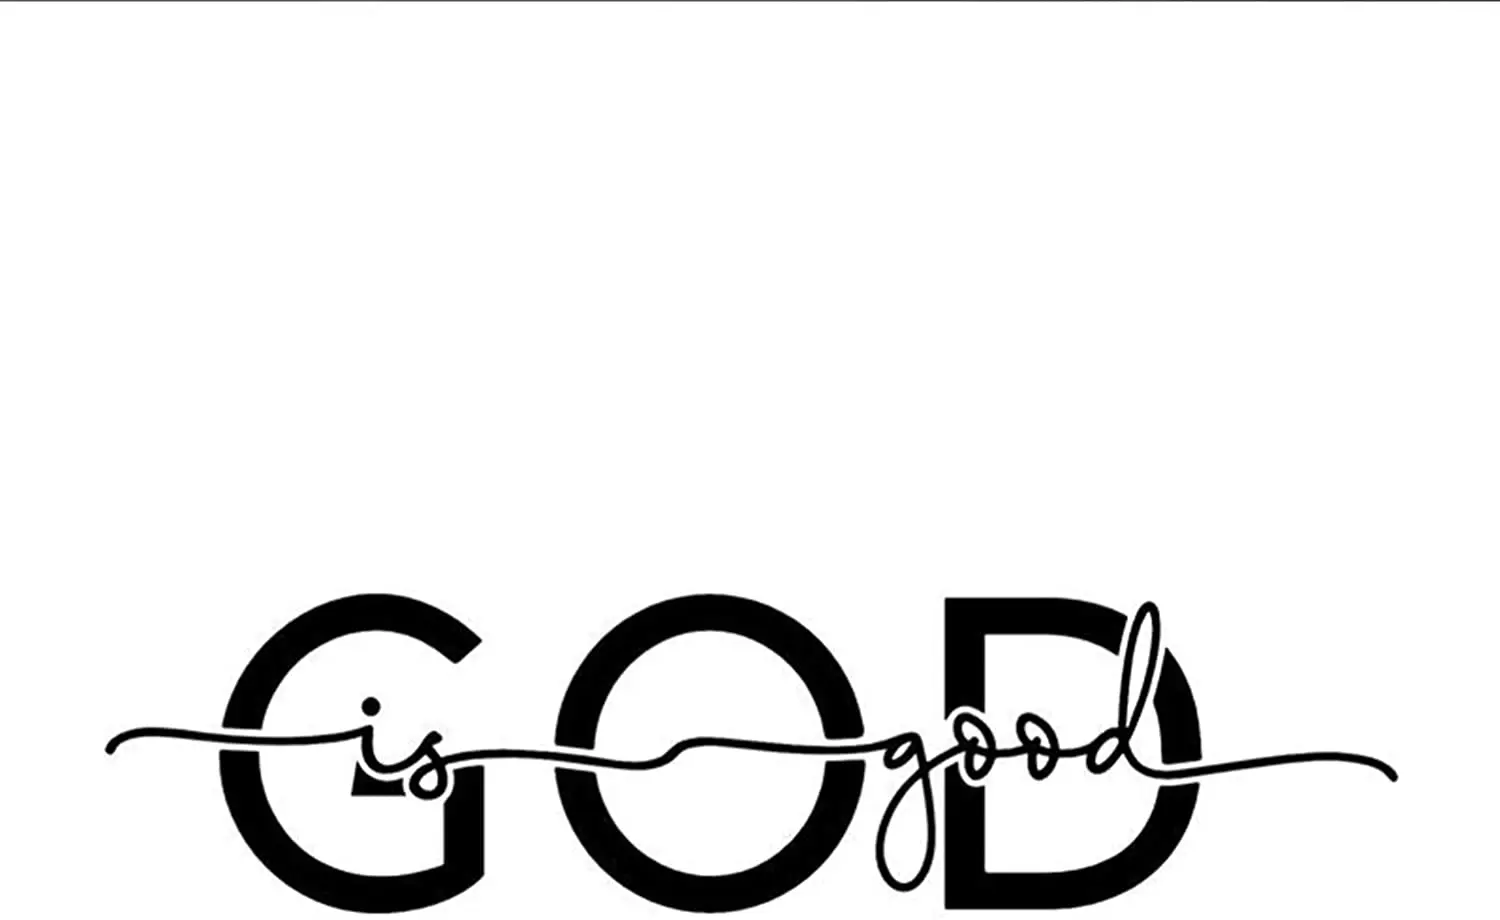 

God is Good Religious Christian White Vinyl Window Decal Sticker for Cars or Laptops, 15*15cm